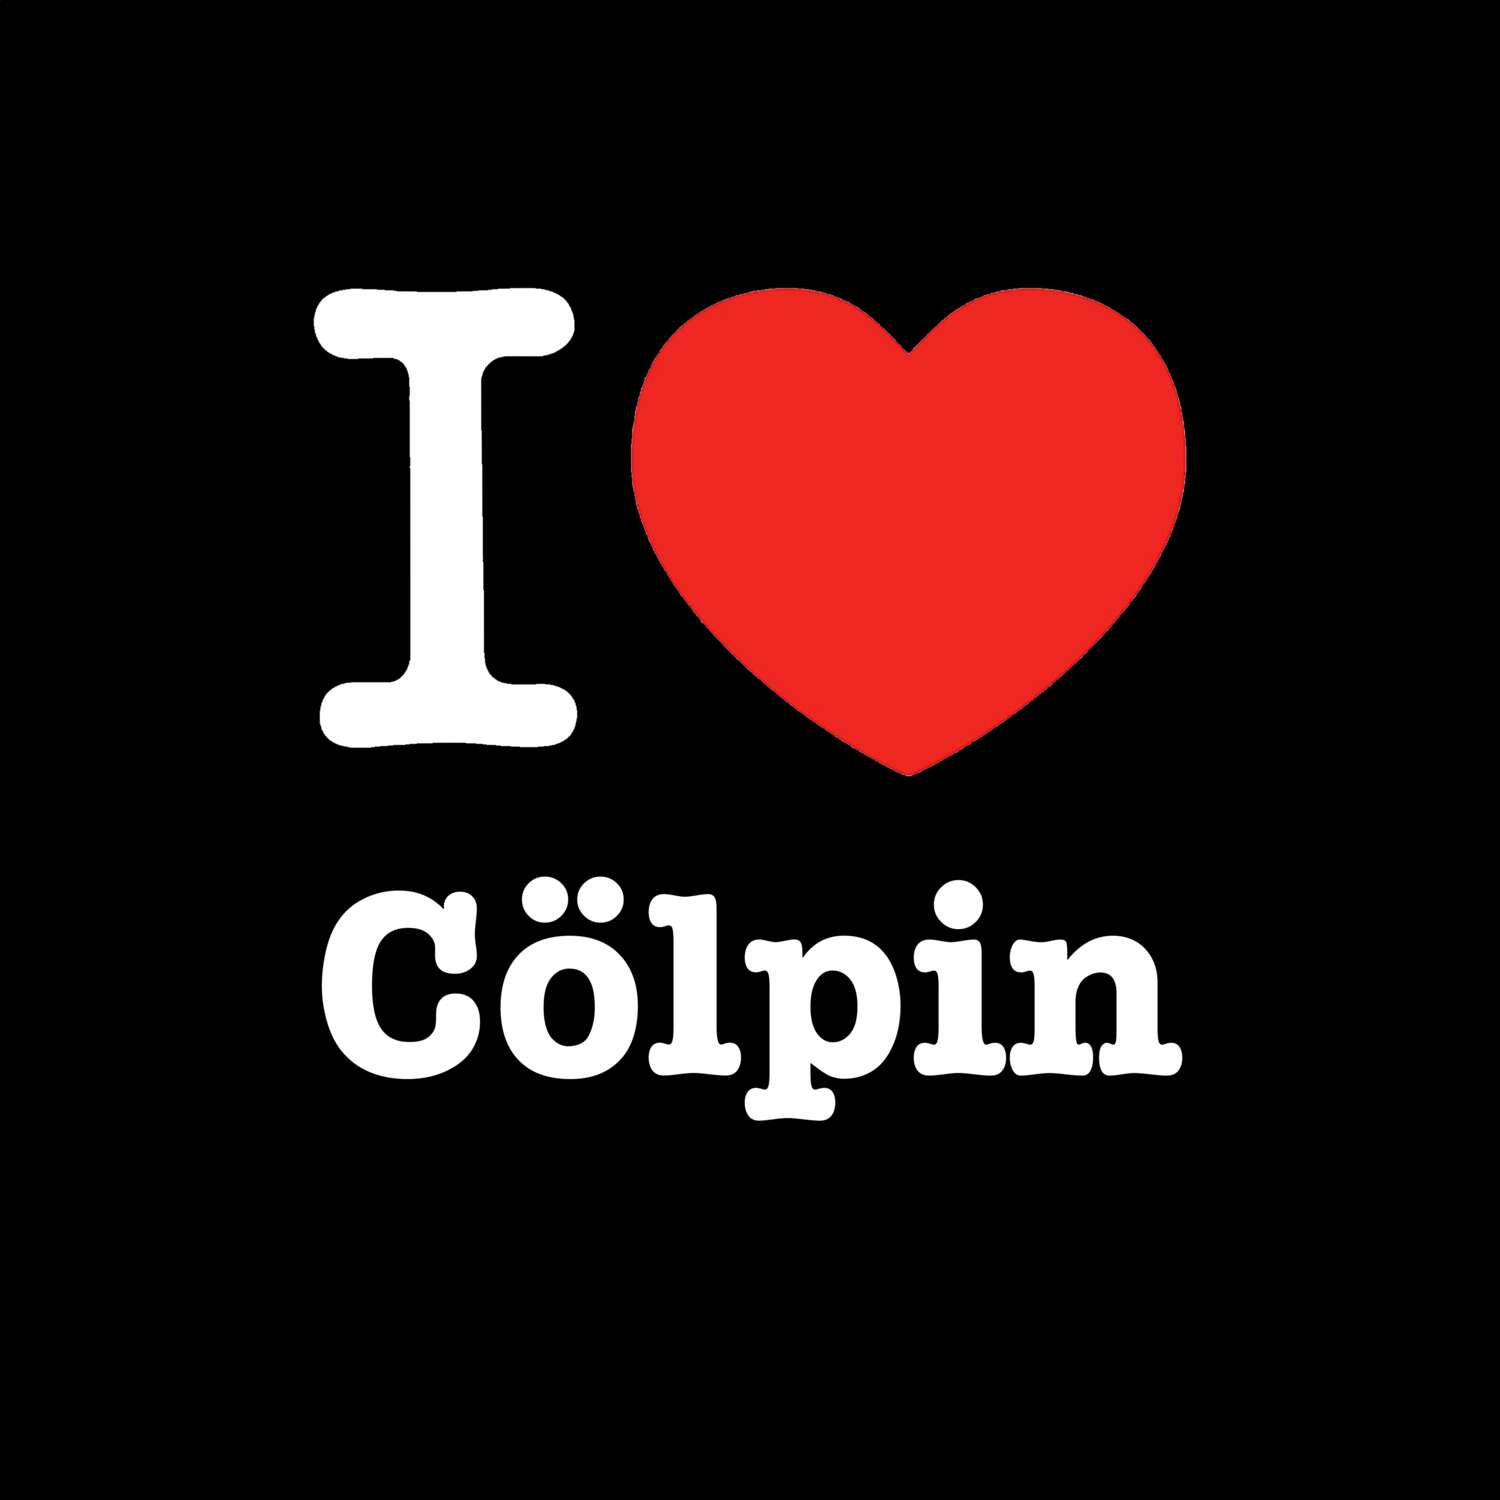 Cölpin T-Shirt »I love«